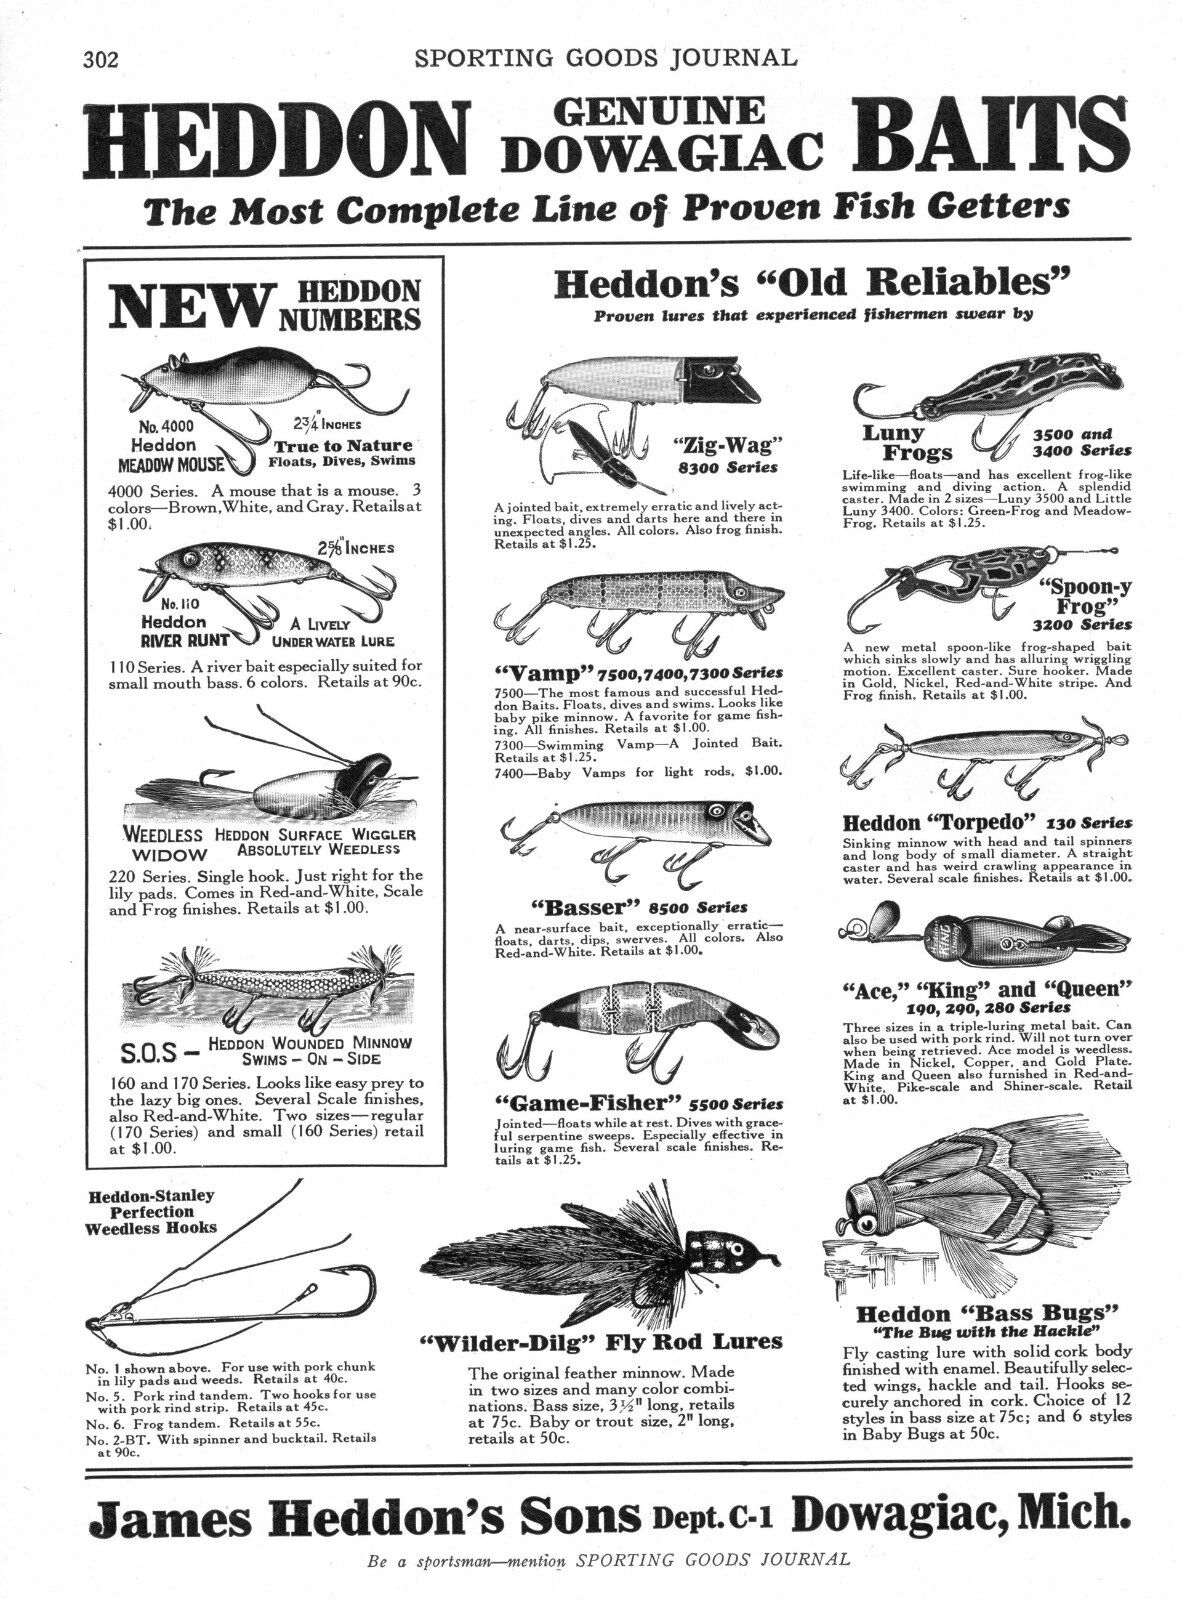 Heddon Baits -  Lures  -   Hobart Tackle Box -  Fishing  -  1929